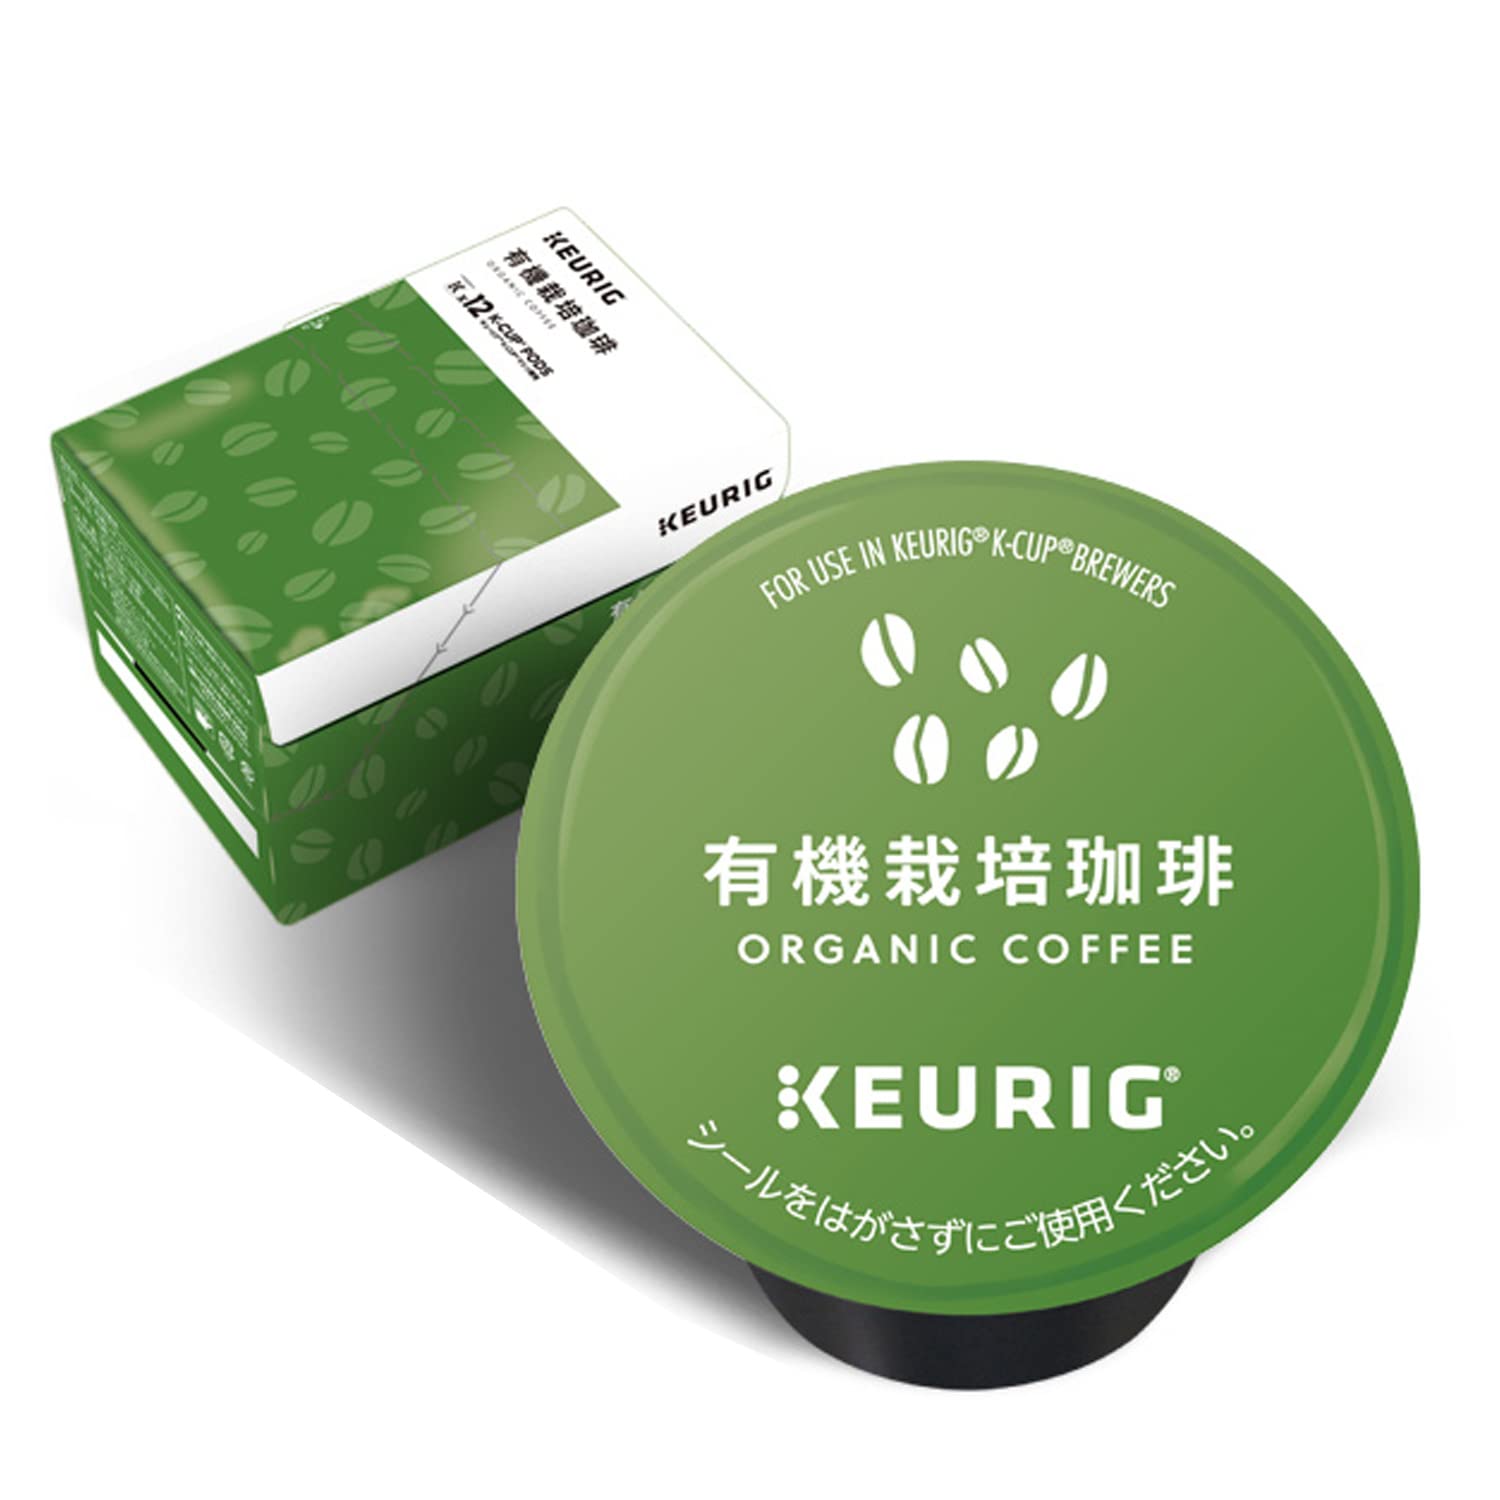 Keurig(キューリグ) 有機栽培珈琲 (8g×12個入) 8箱セット 96杯分 SC1914*8